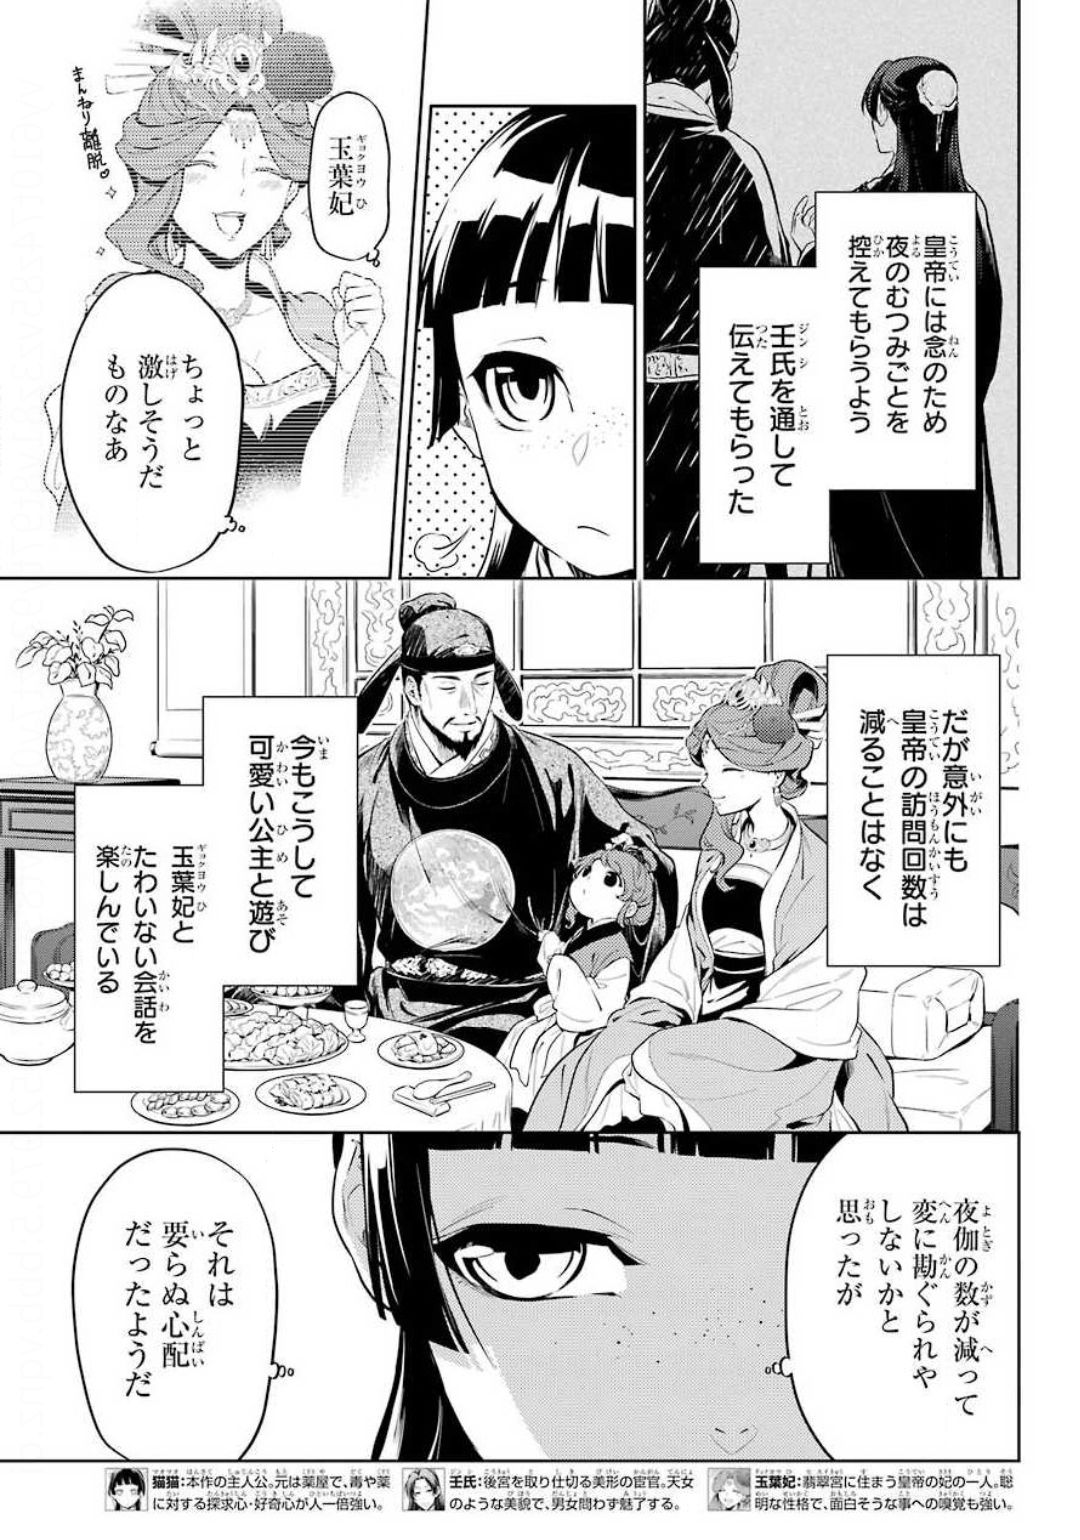 Kusuriya no Hitorigoto - Chapter 35.1 - Page 3